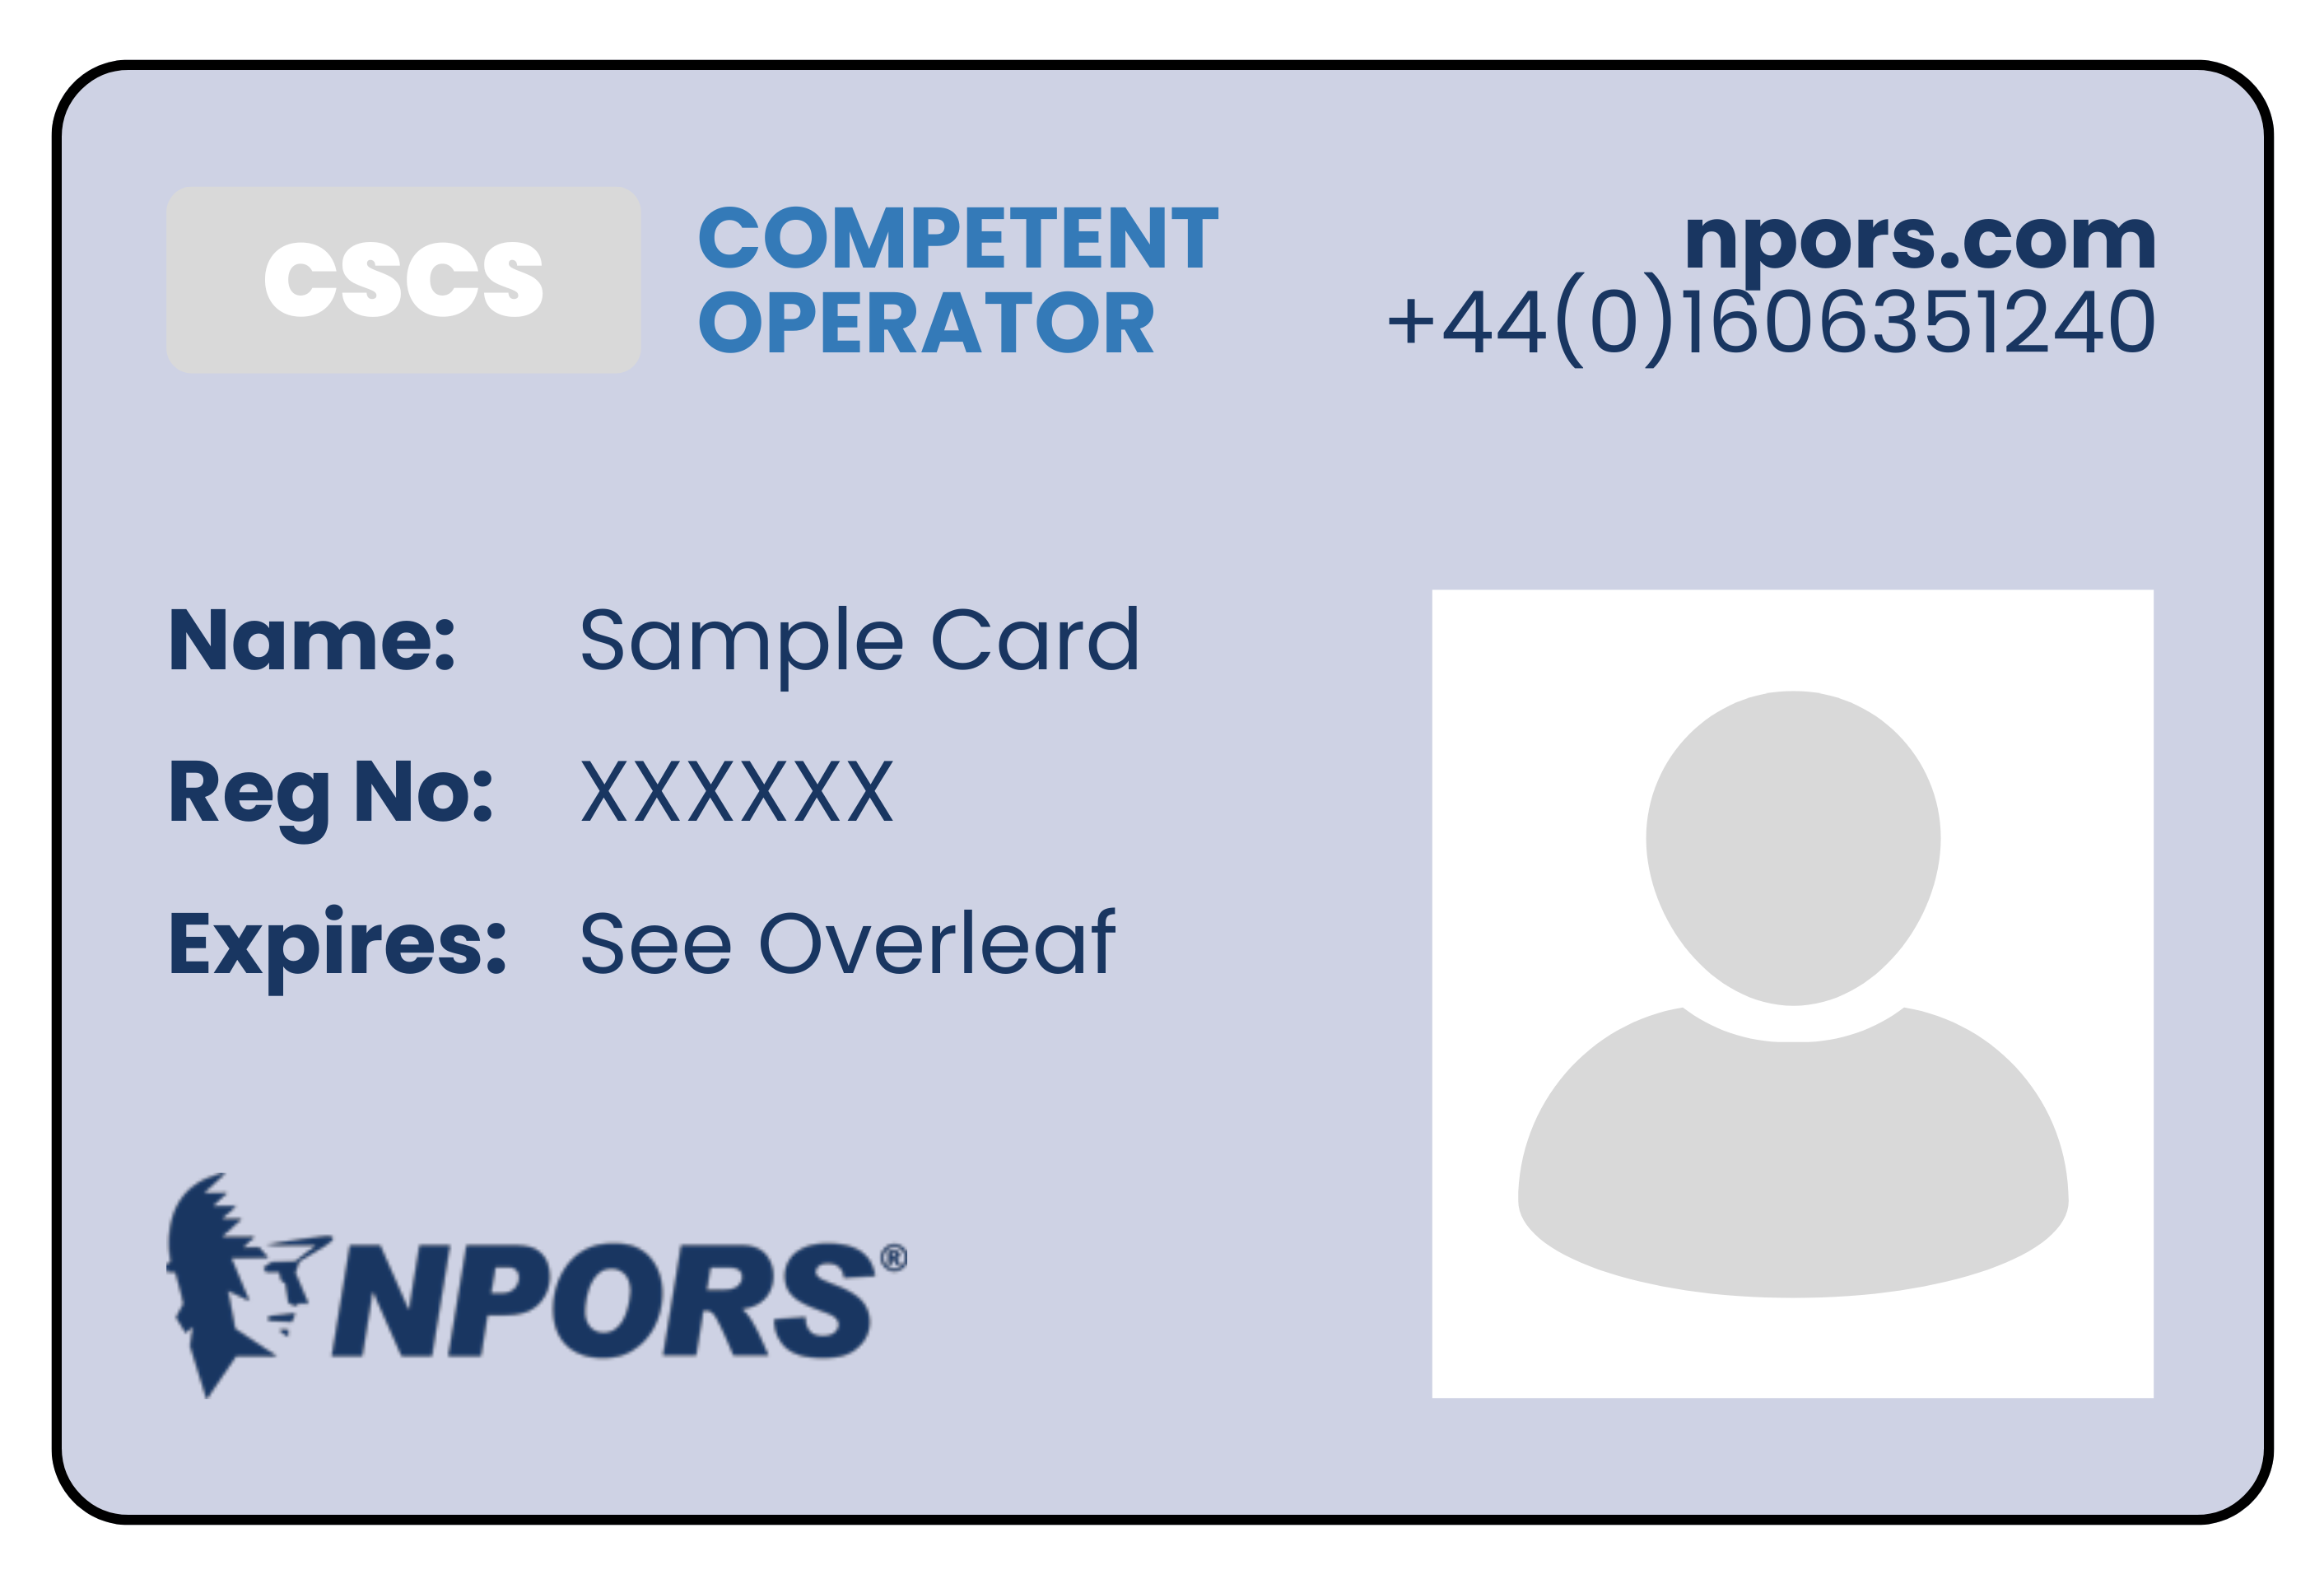 NPORS Competent Operator Card - NPORS Card Checker